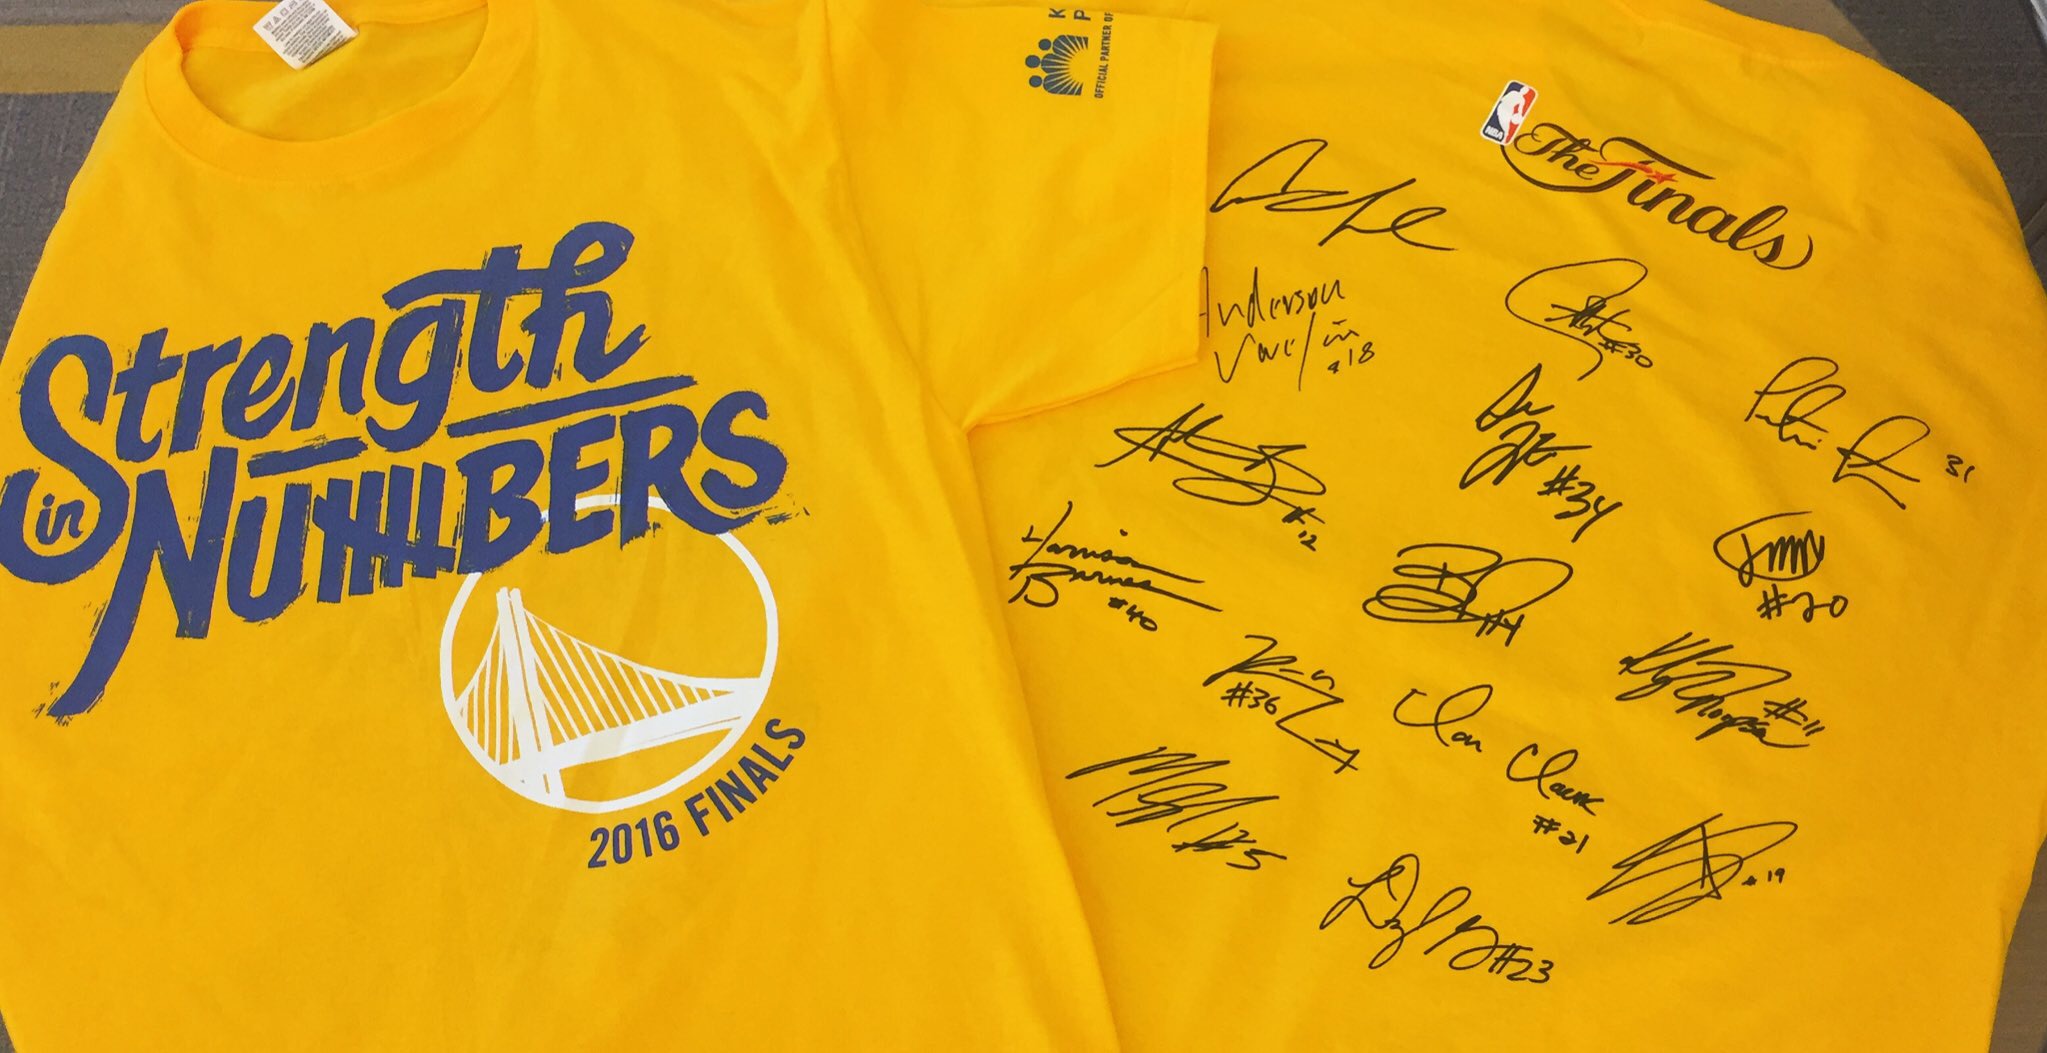 Unique Signature Player Golden State Warriors T Shirt, NBA